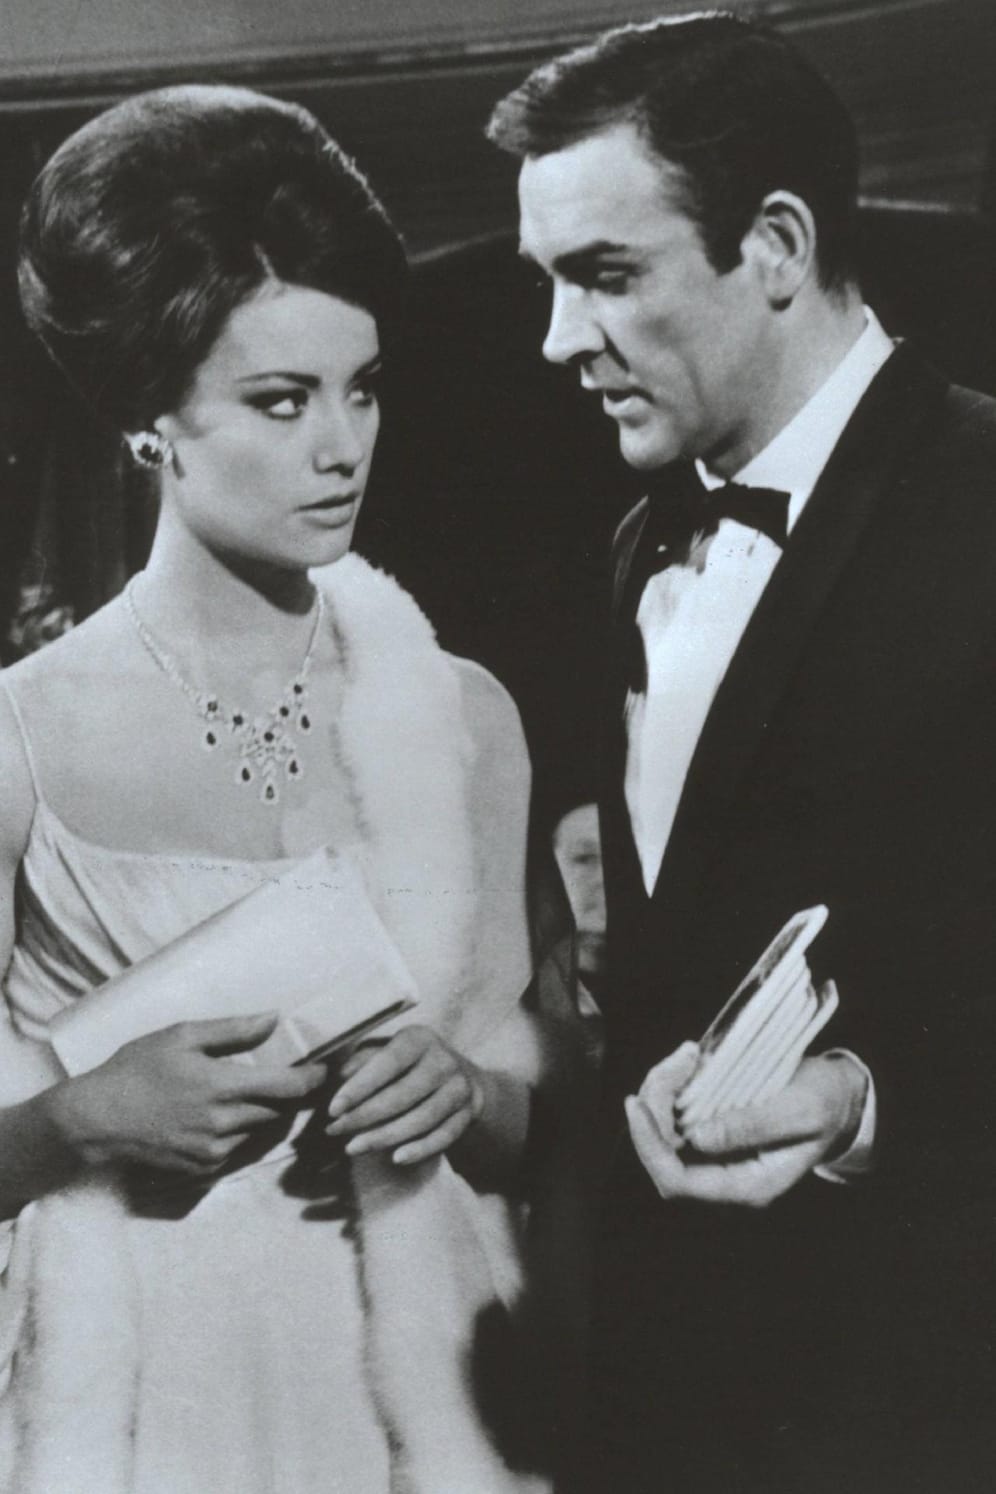 Claudine Auger als Domino Derval in "Feuerball" (1965)